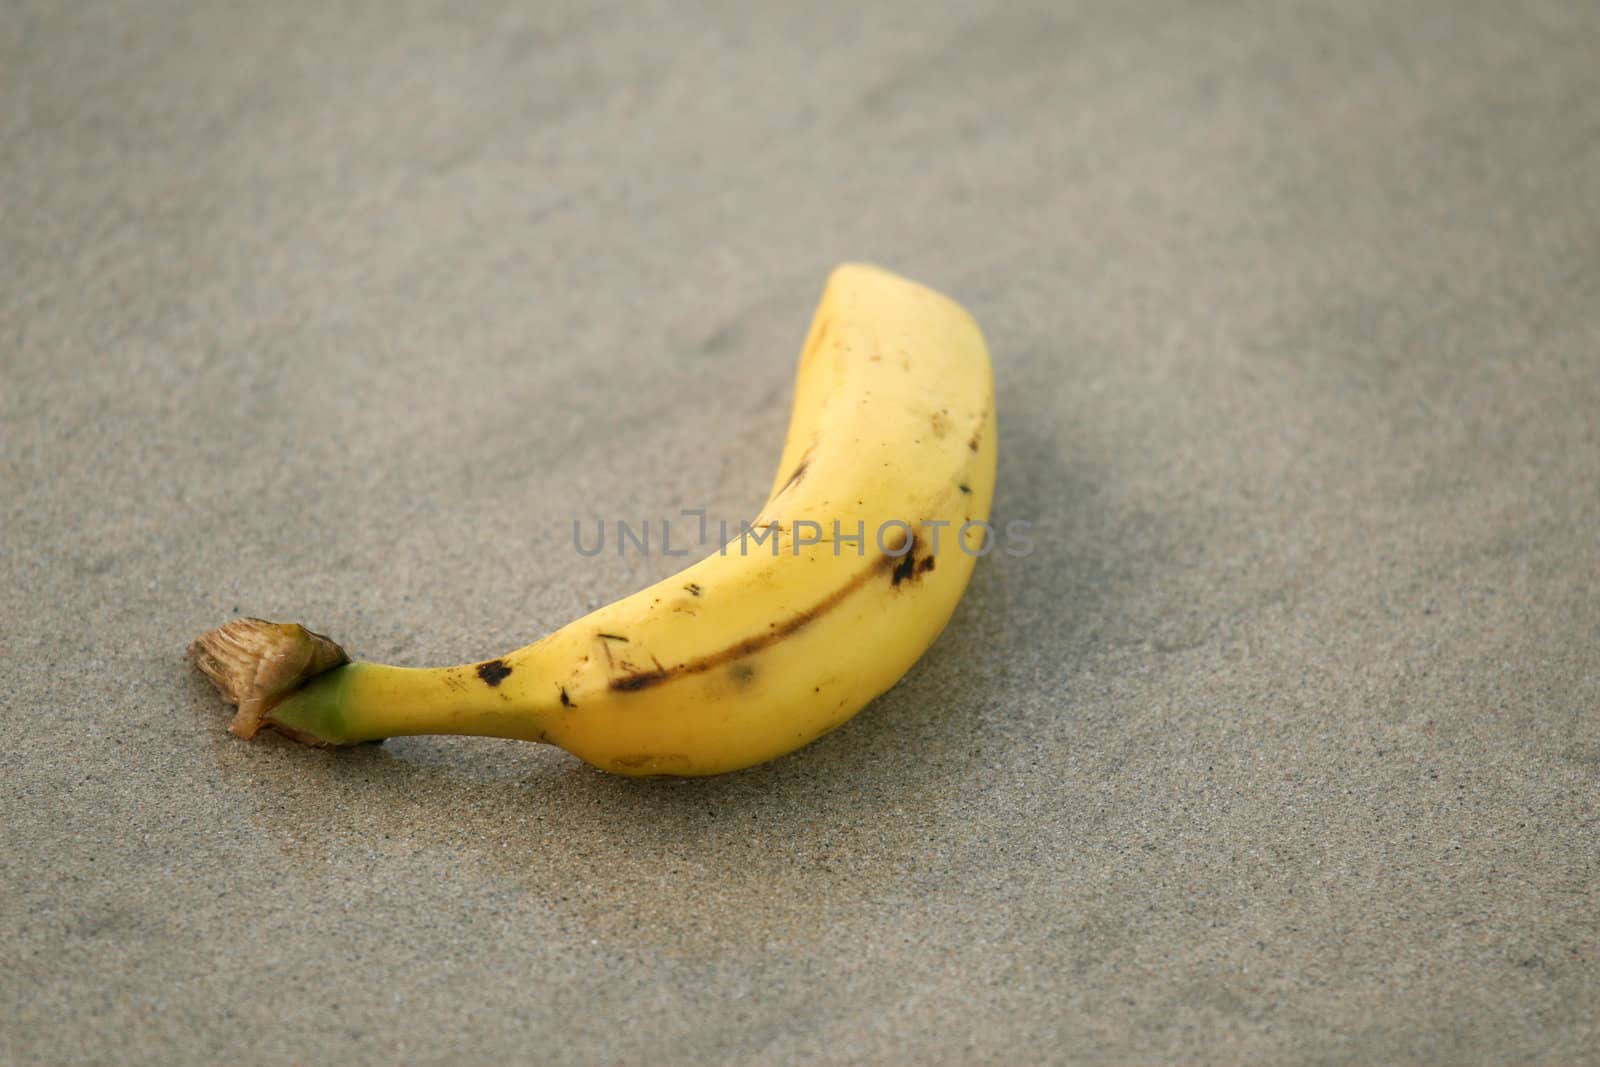 single banana lying on the sand beach